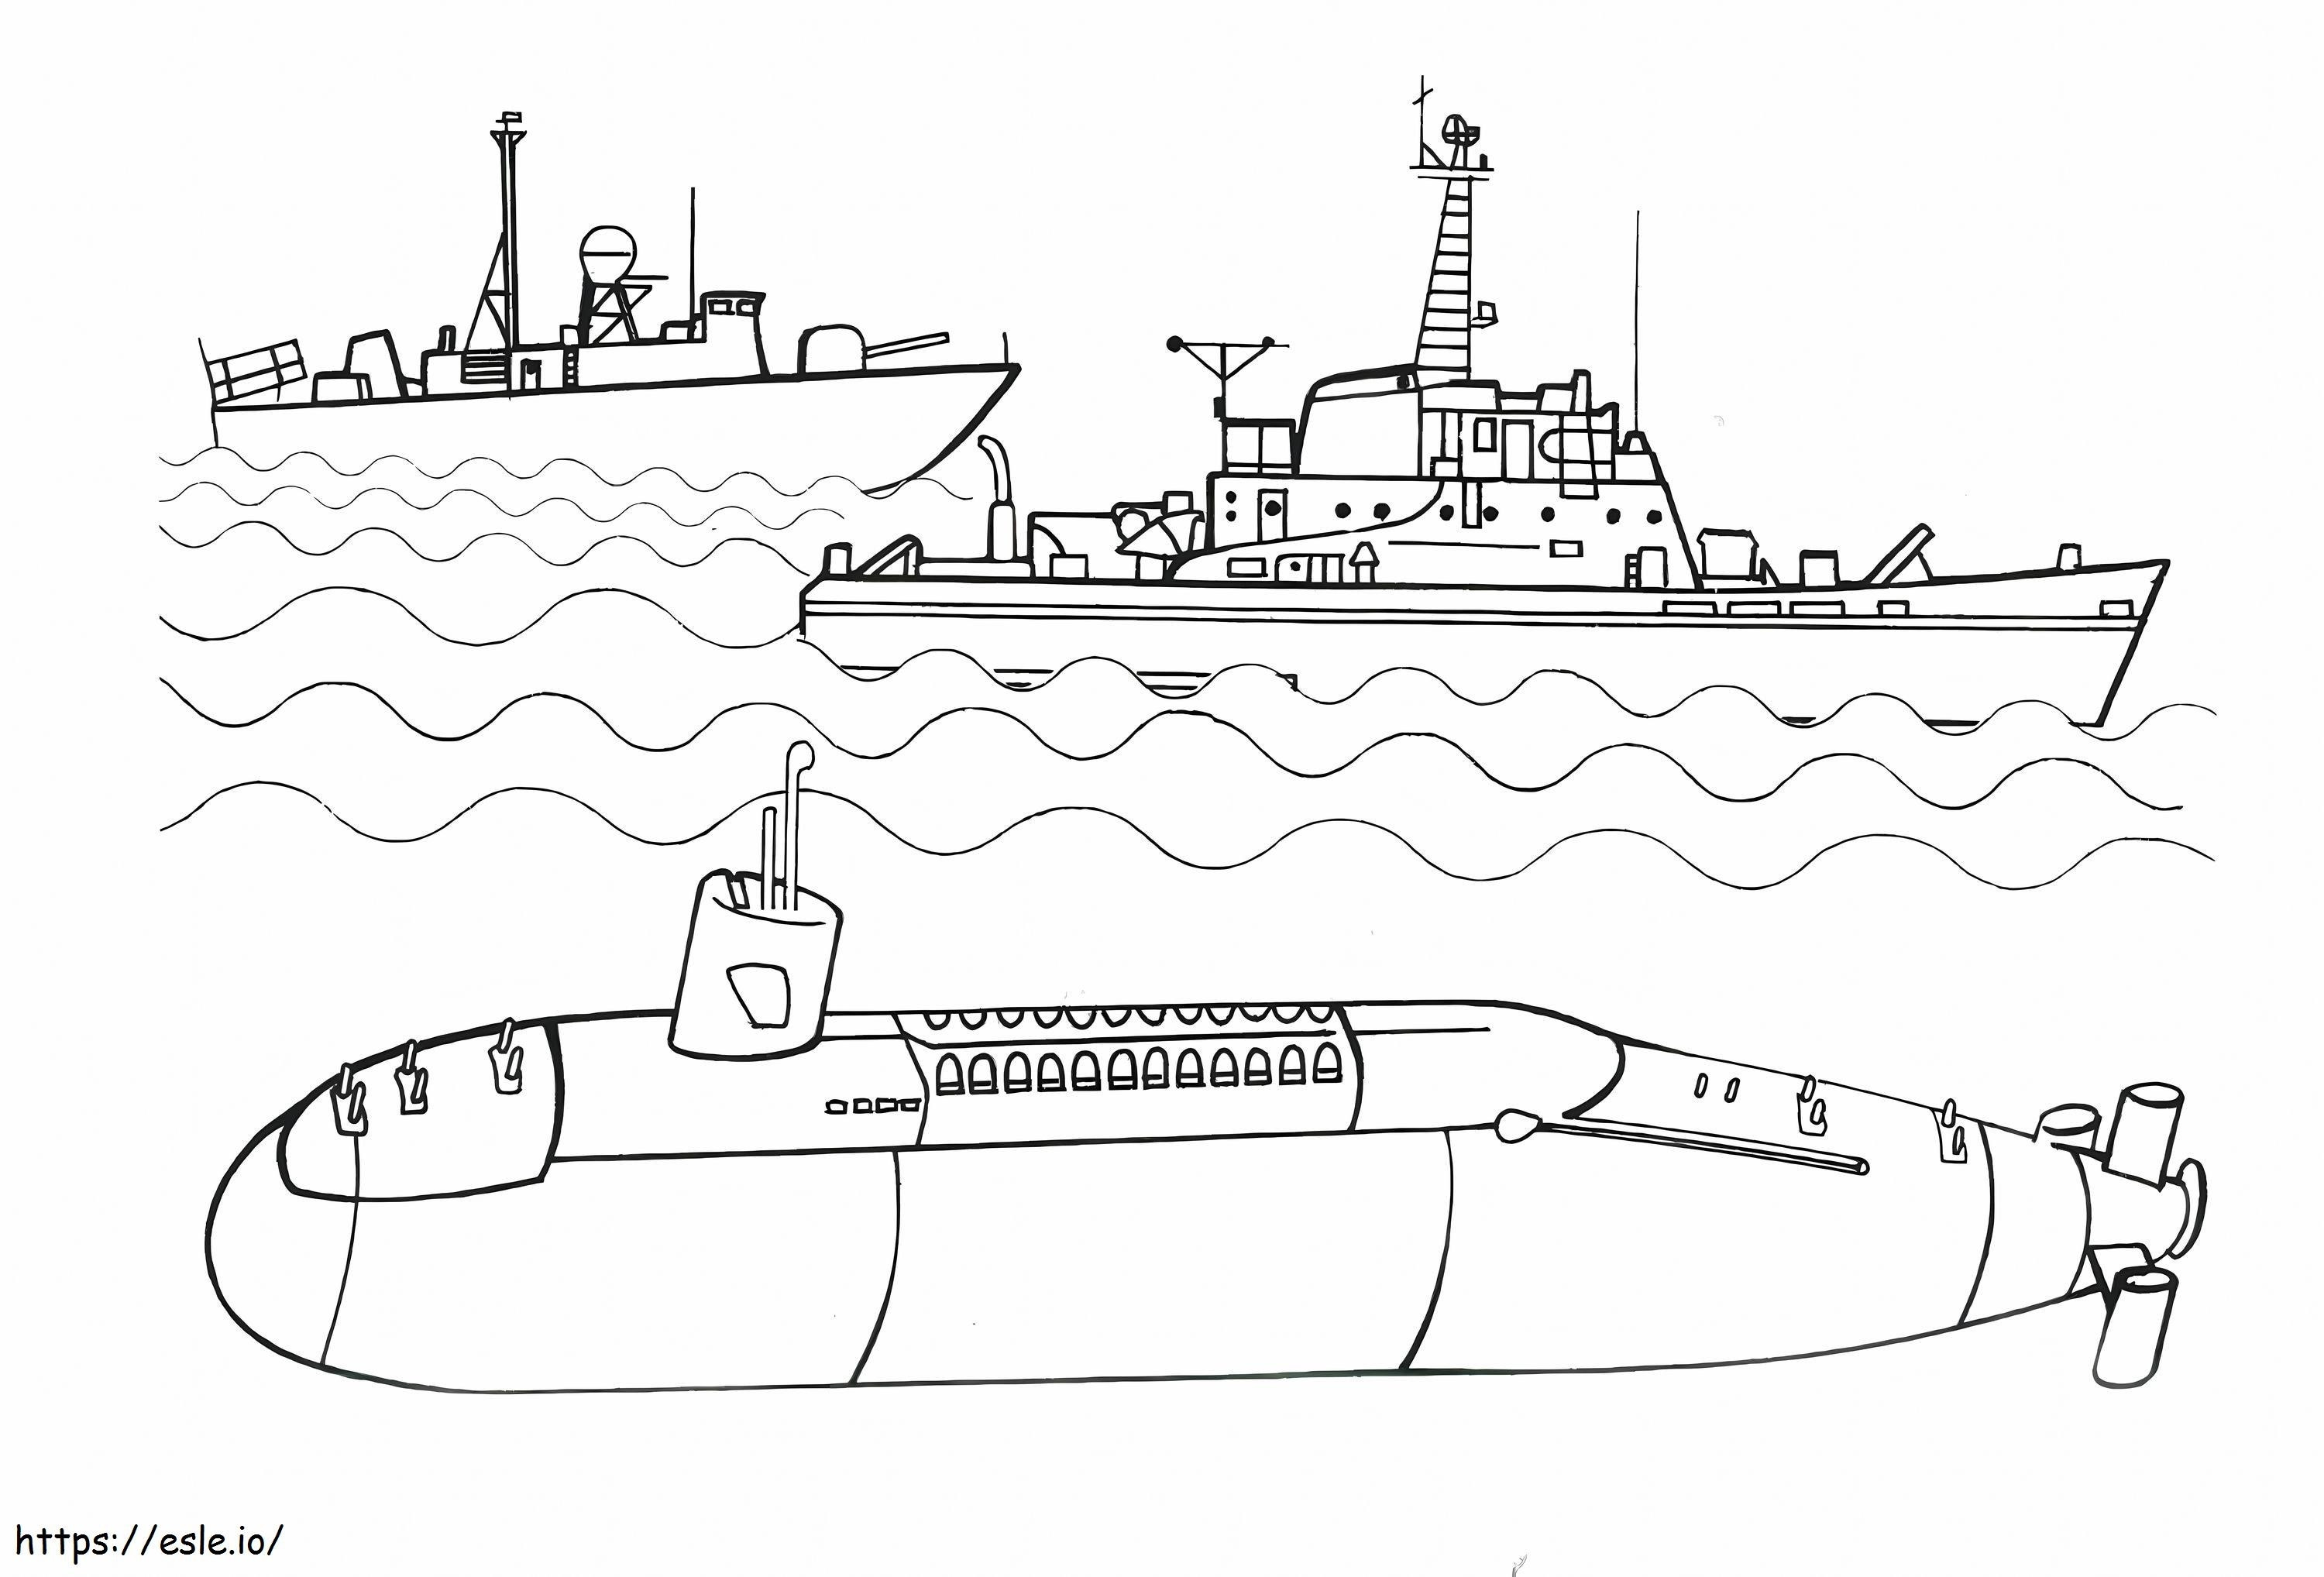 Submarino e dois barcos para colorir